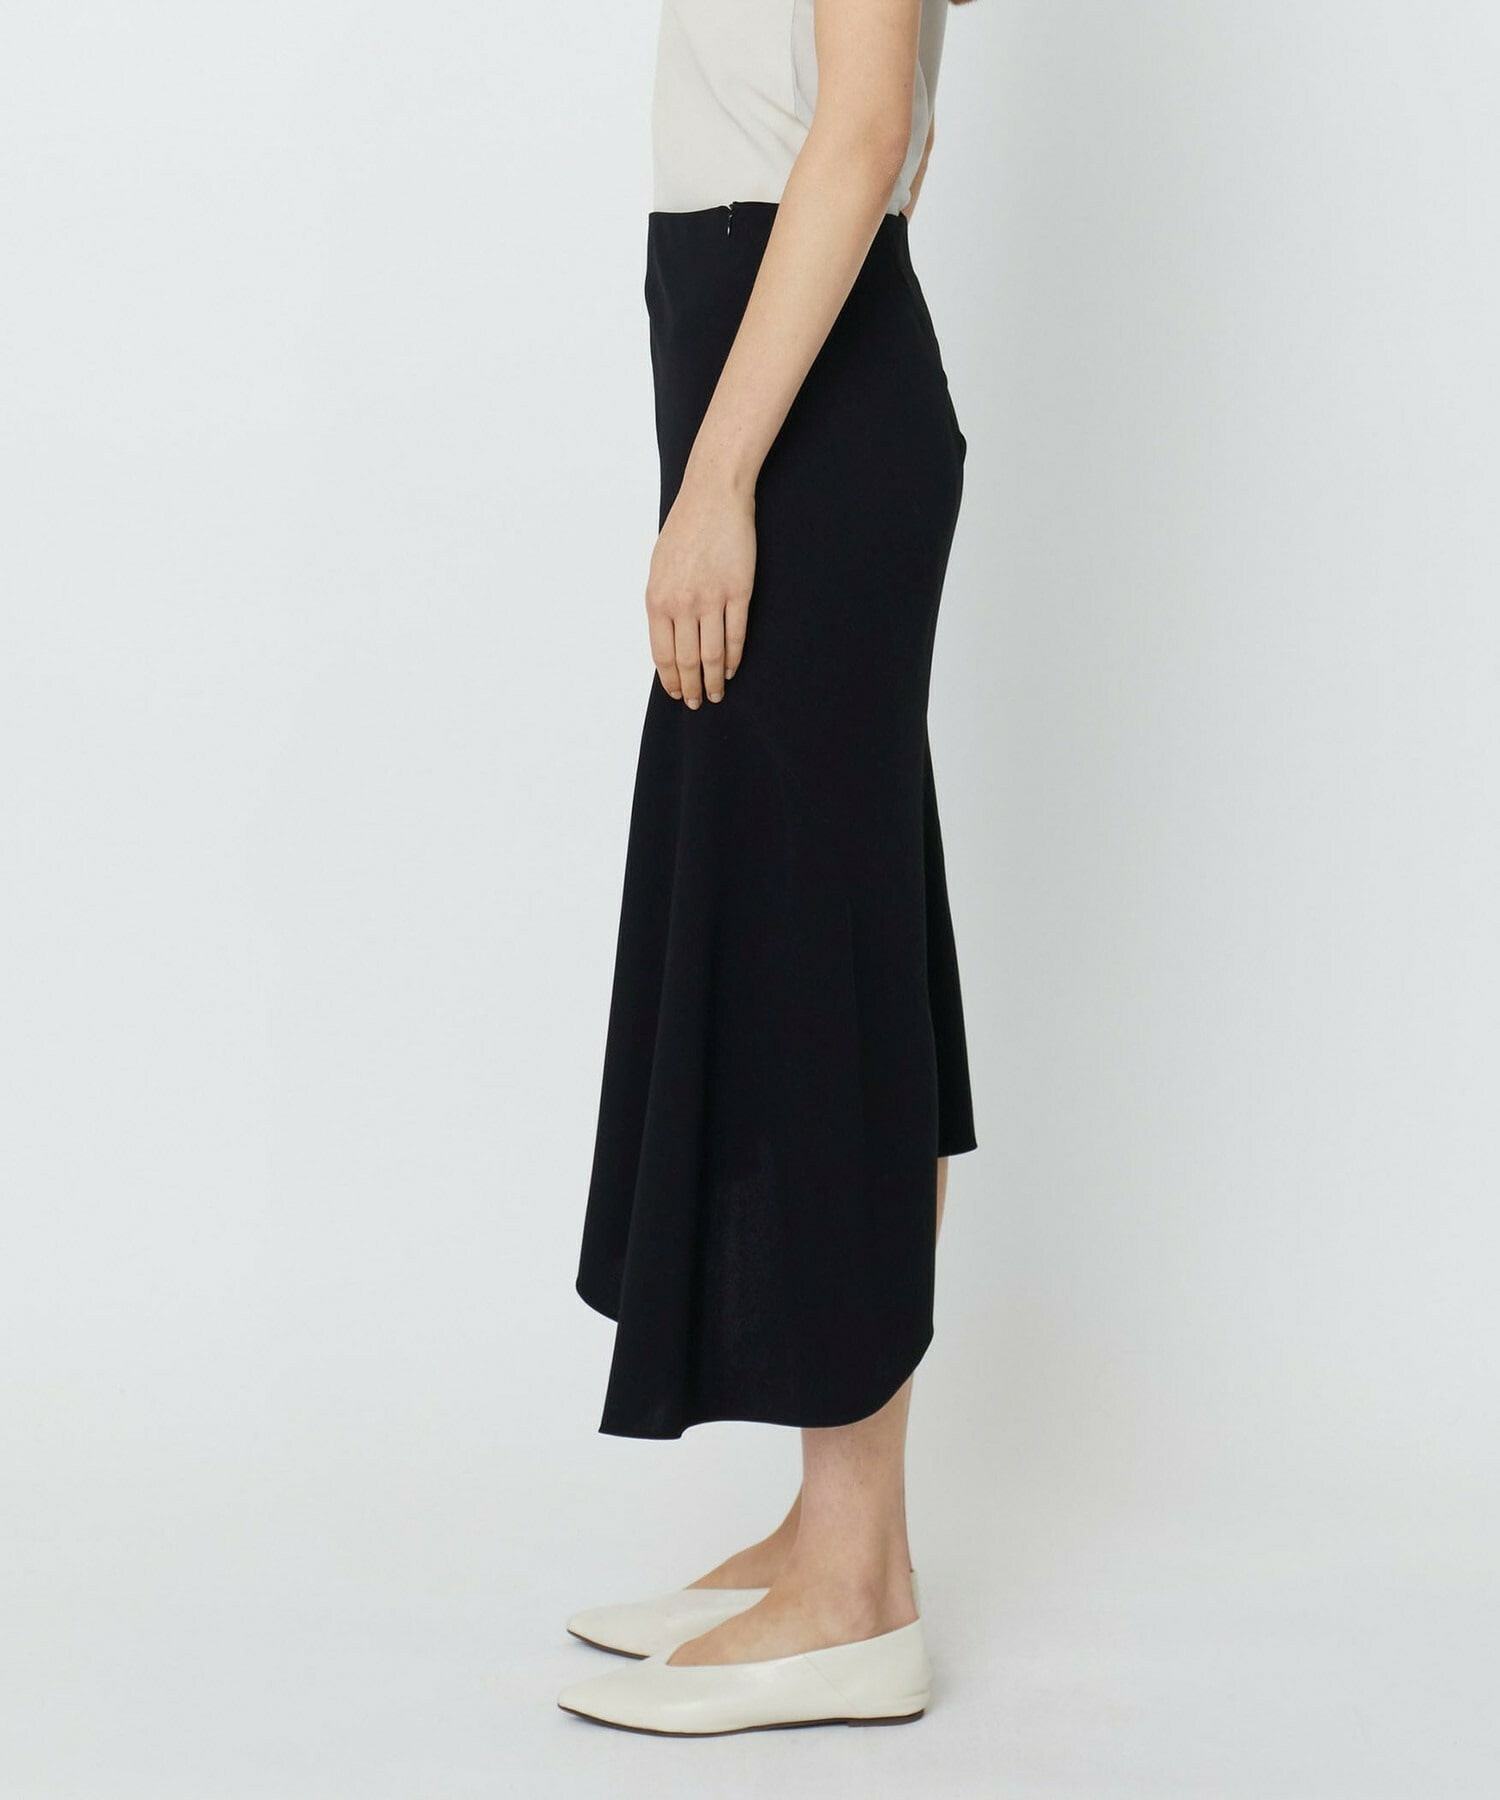 【yoshie inaba】LIGHT DOUBLE CLOTH  “BIAS-CUT” “SPIRAL SEAMED” SKIRT 詳細画像 ブラック 3